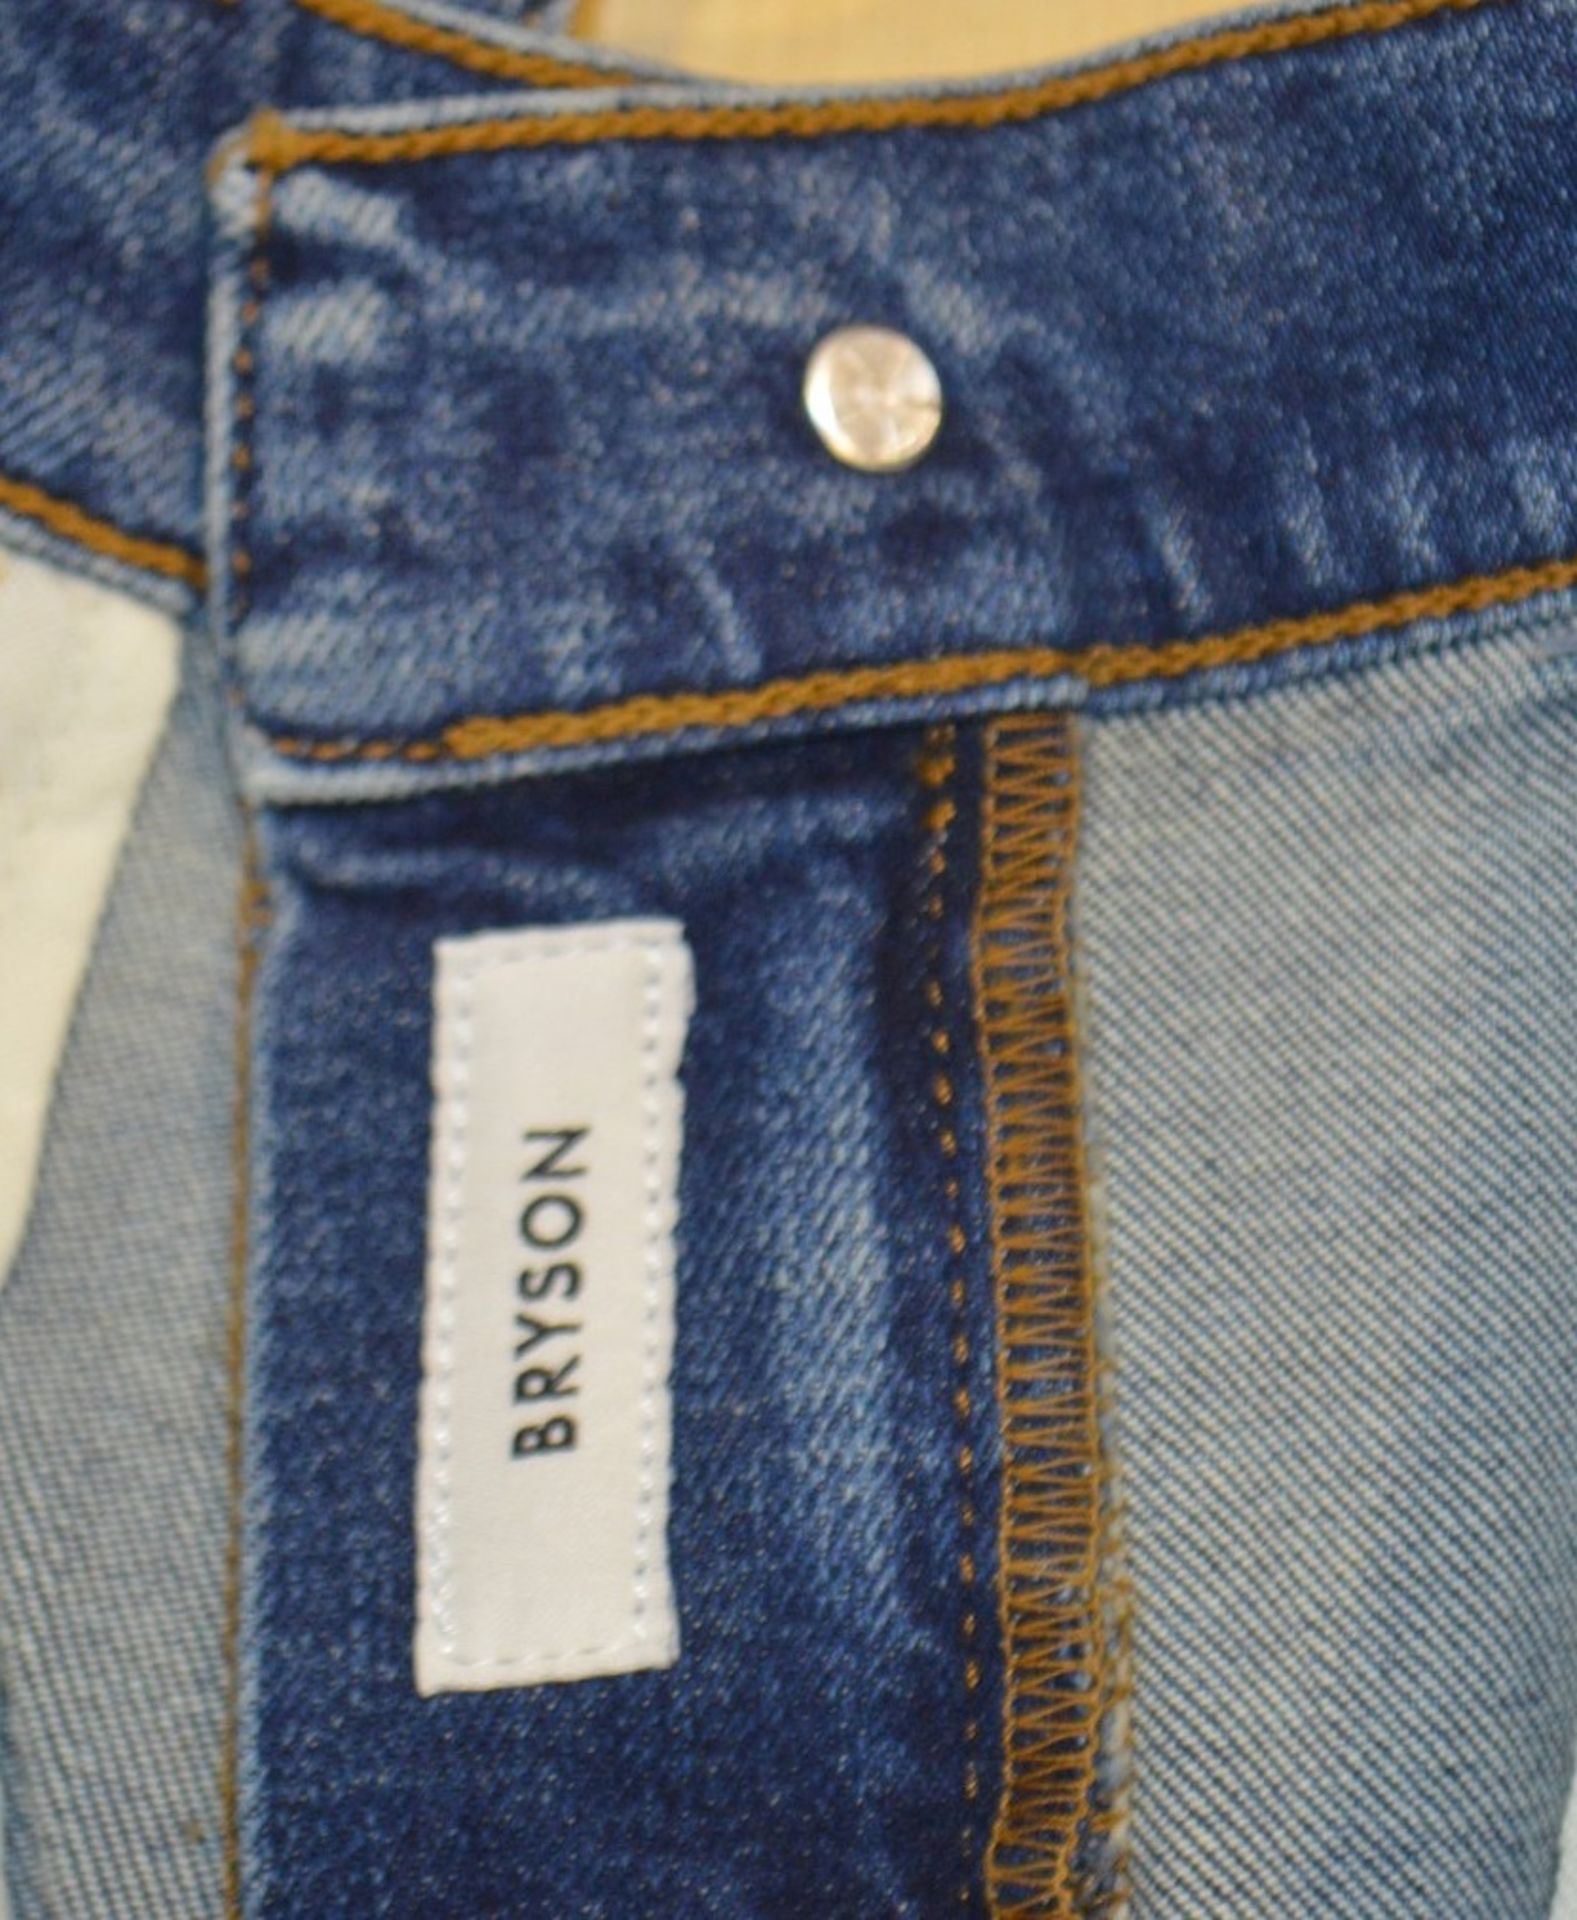 1 x Pair Of Men's Genuine Wrangler BRYSON Skinny Jeans In Blue - Size: UK 30/32 - Preowned, Like - Image 3 of 10